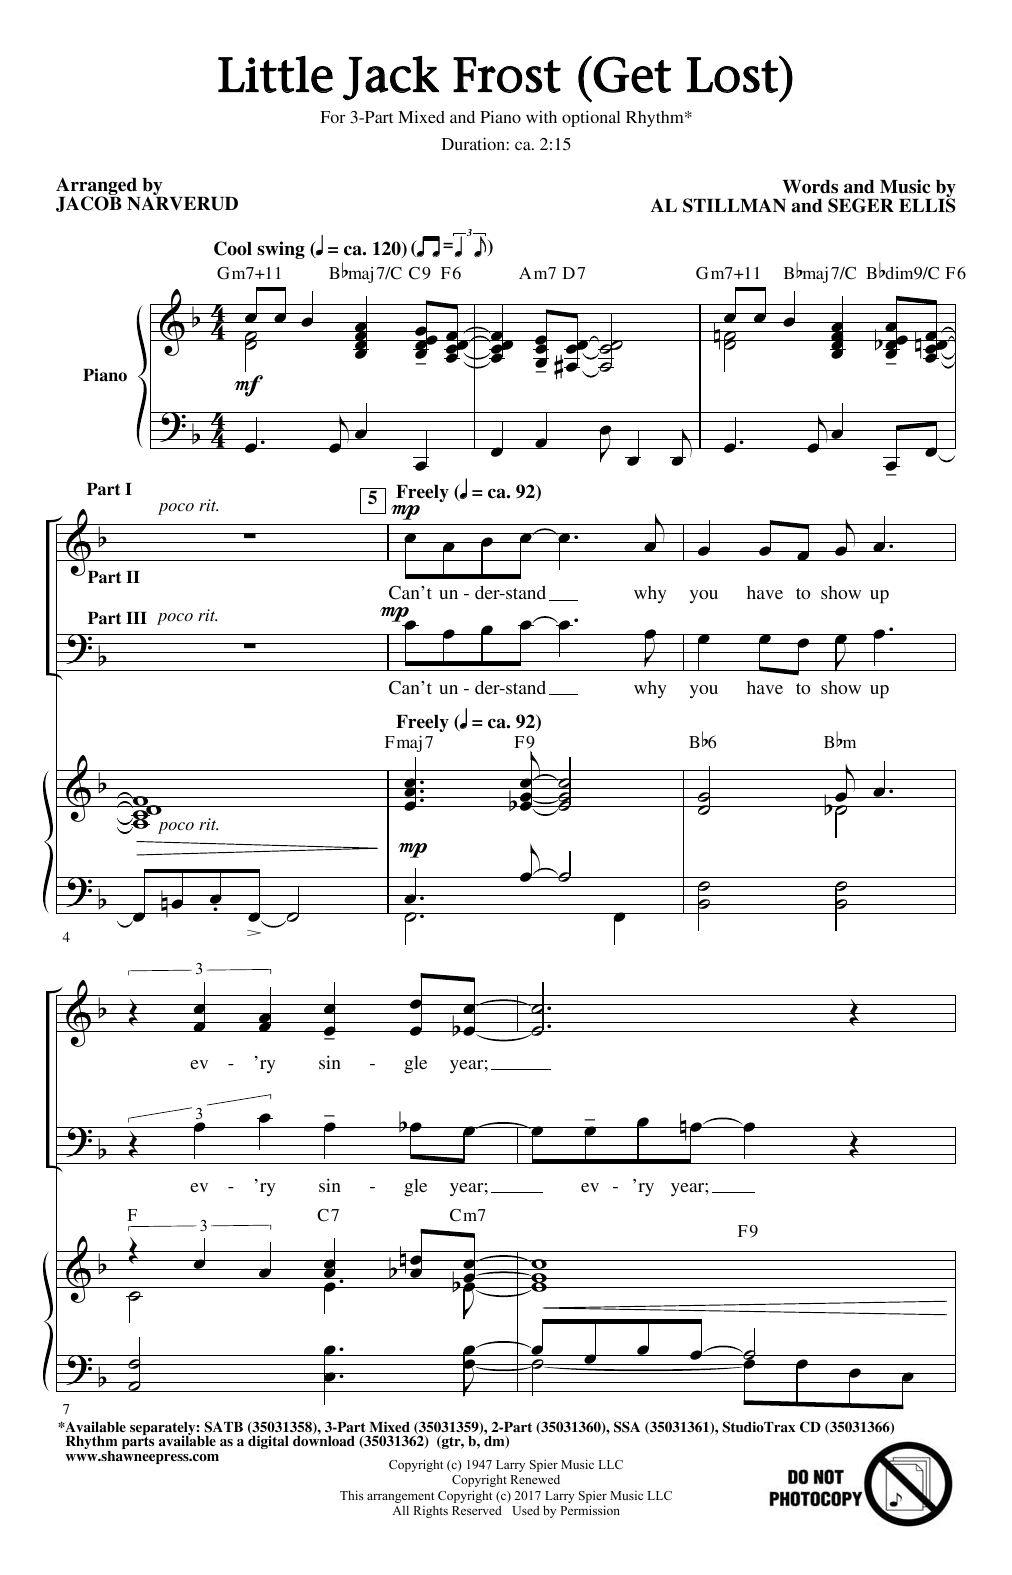 Jacob Narverud Little Jack Frost (Get Lost) Sheet Music Notes & Chords for SSA - Download or Print PDF